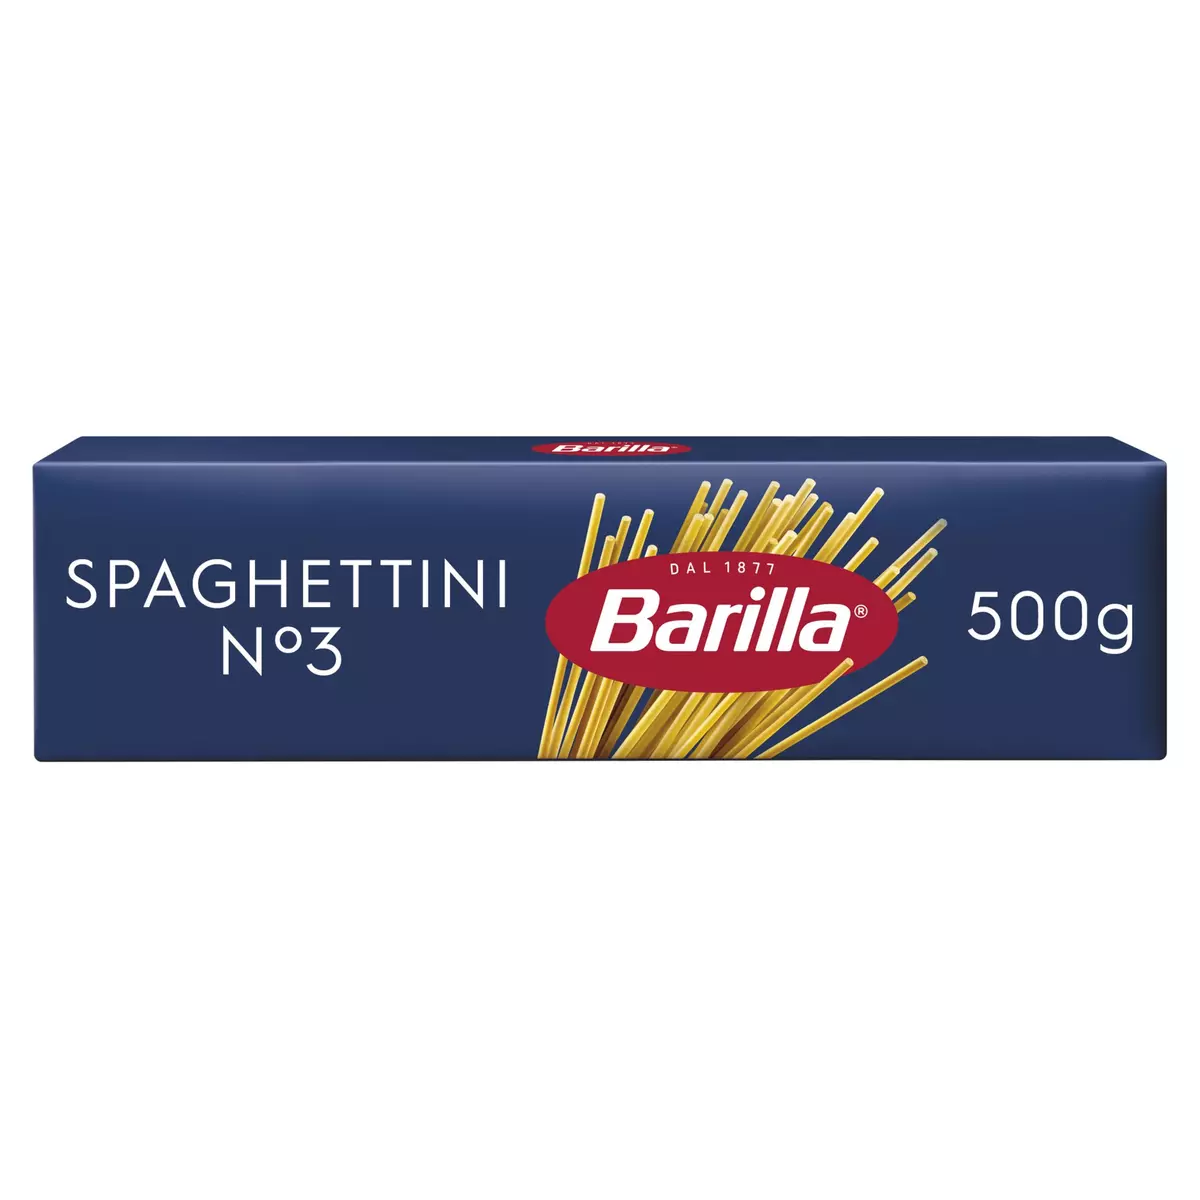 BARILLA Spaghettini n°3 500g